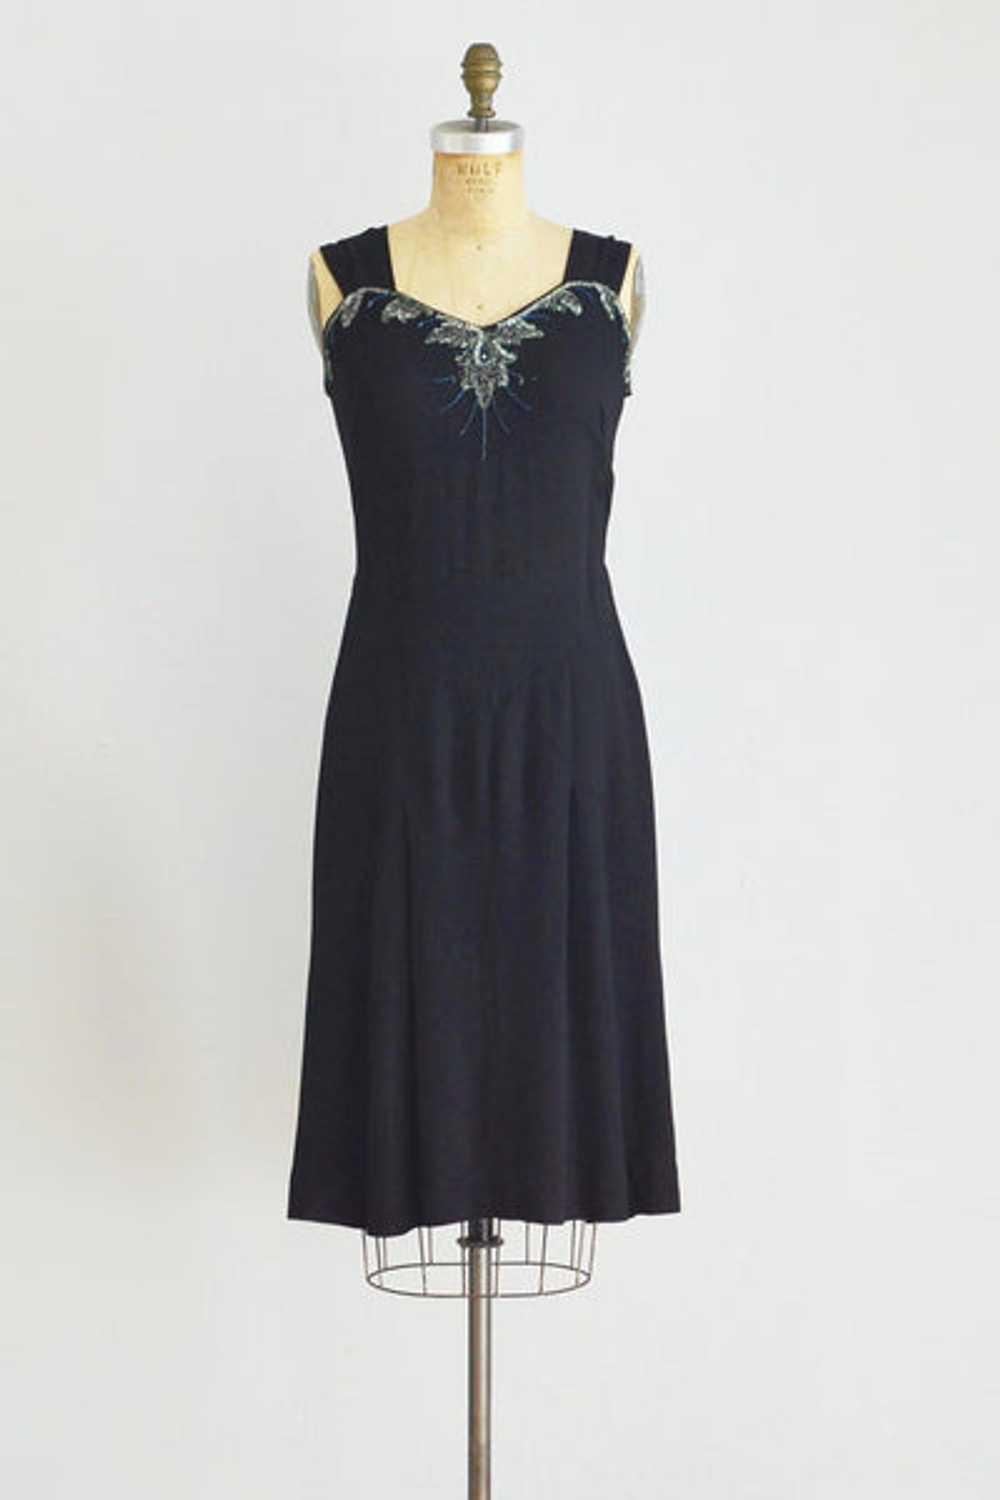 40's Beaded Dress - image 1